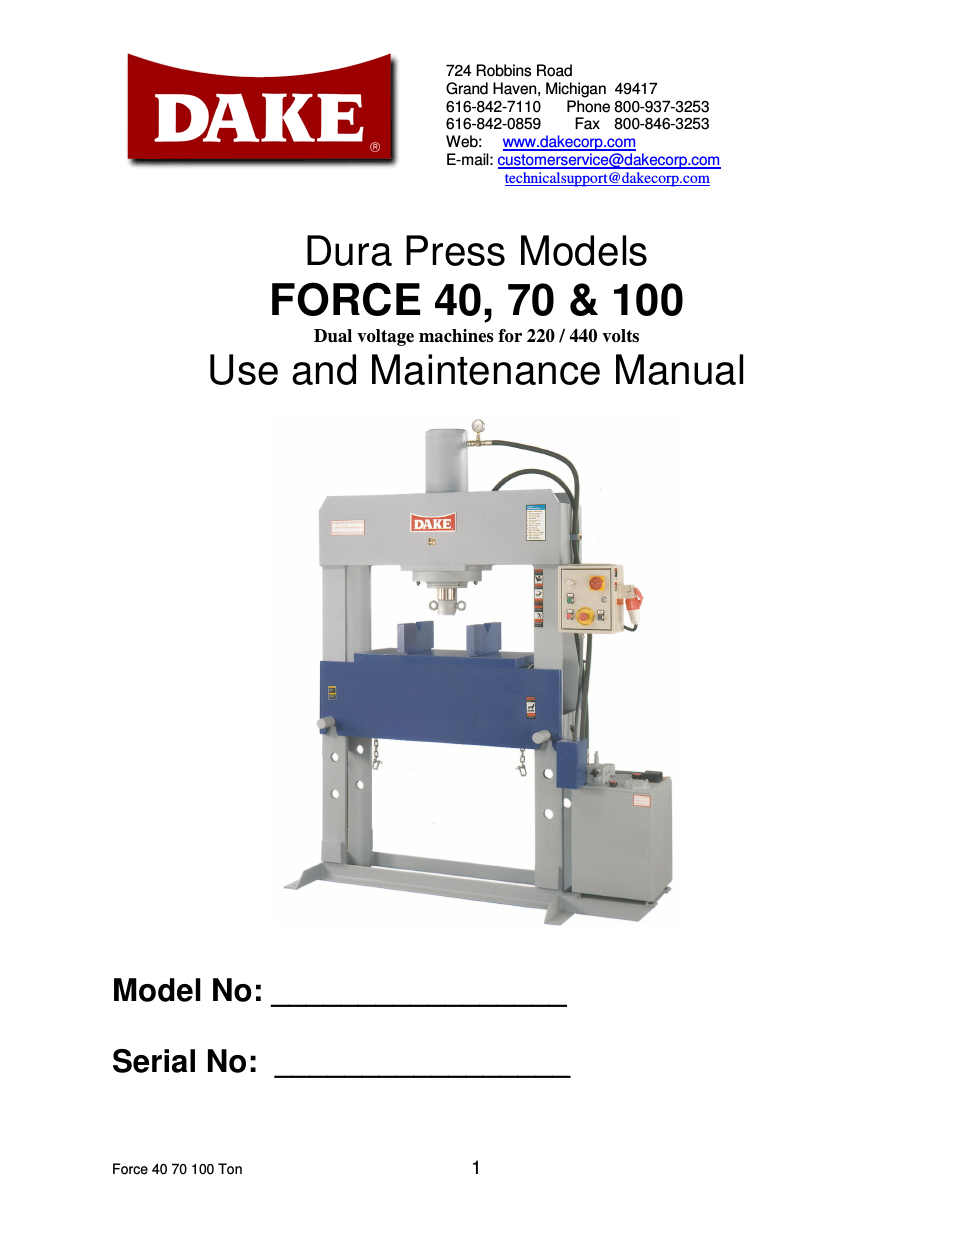 Dura Press Force - 40/70/100